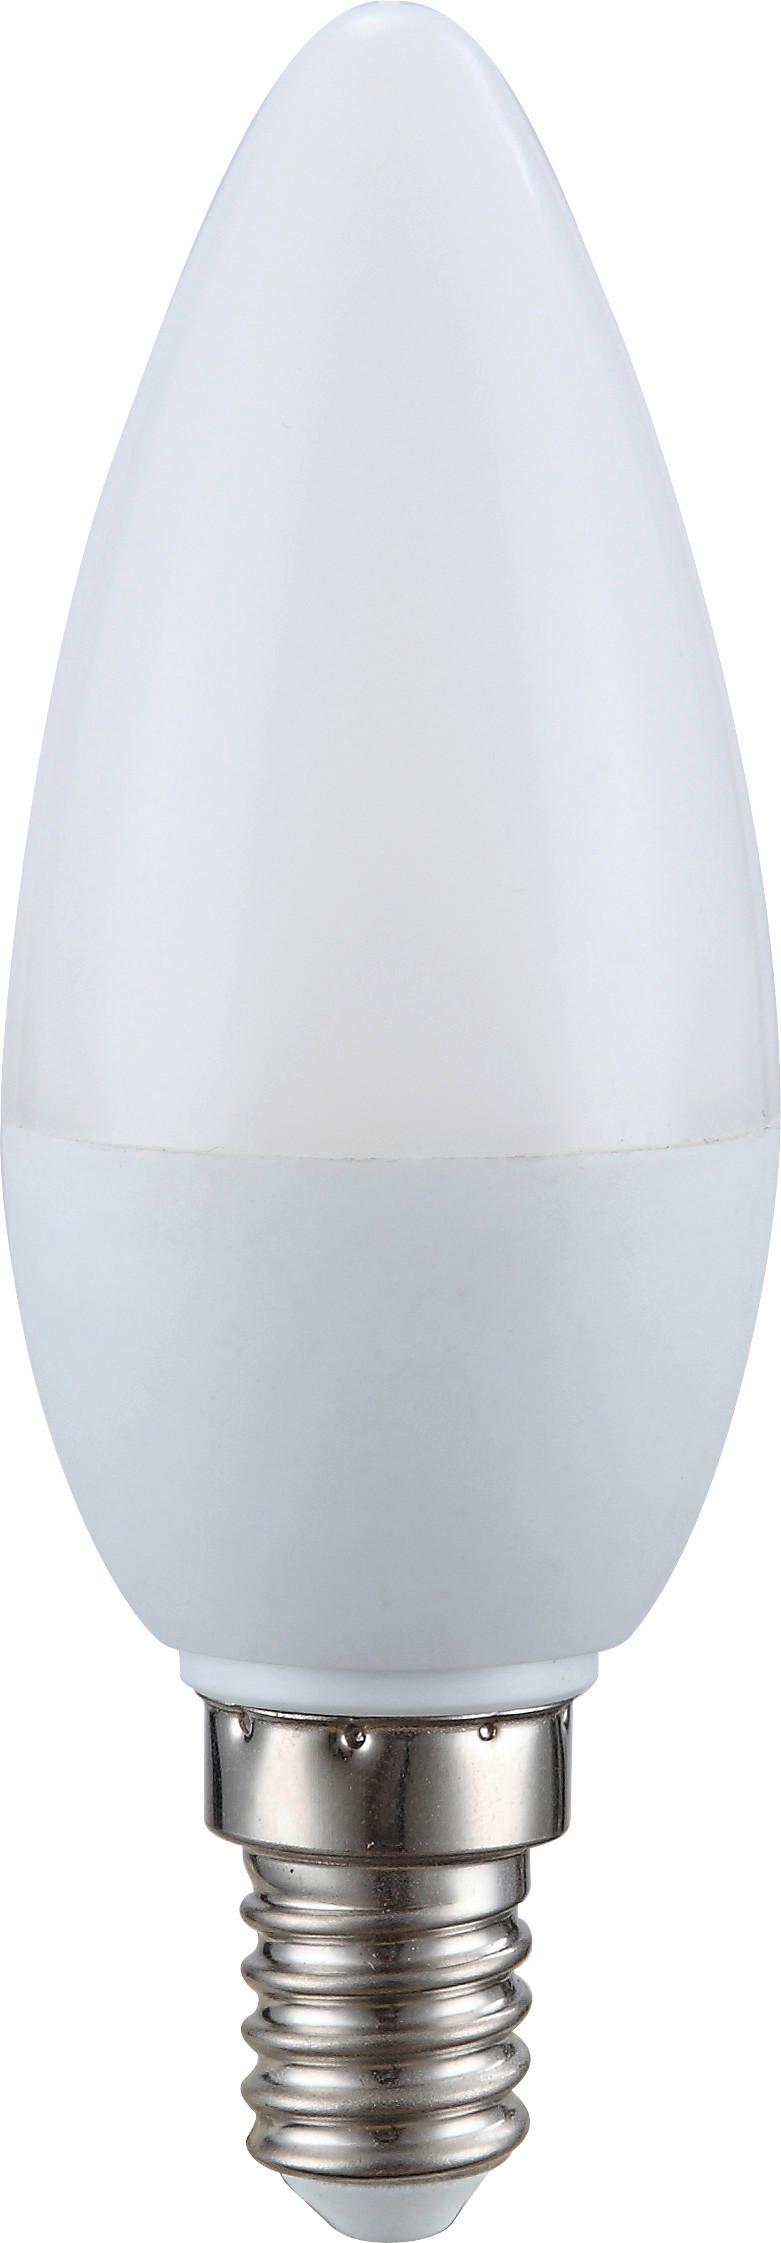 LED-Leuchtmittel 107690-5 max. 3 Watt - Weiß, Kunststoff (3,7/10cm) - Modern Living